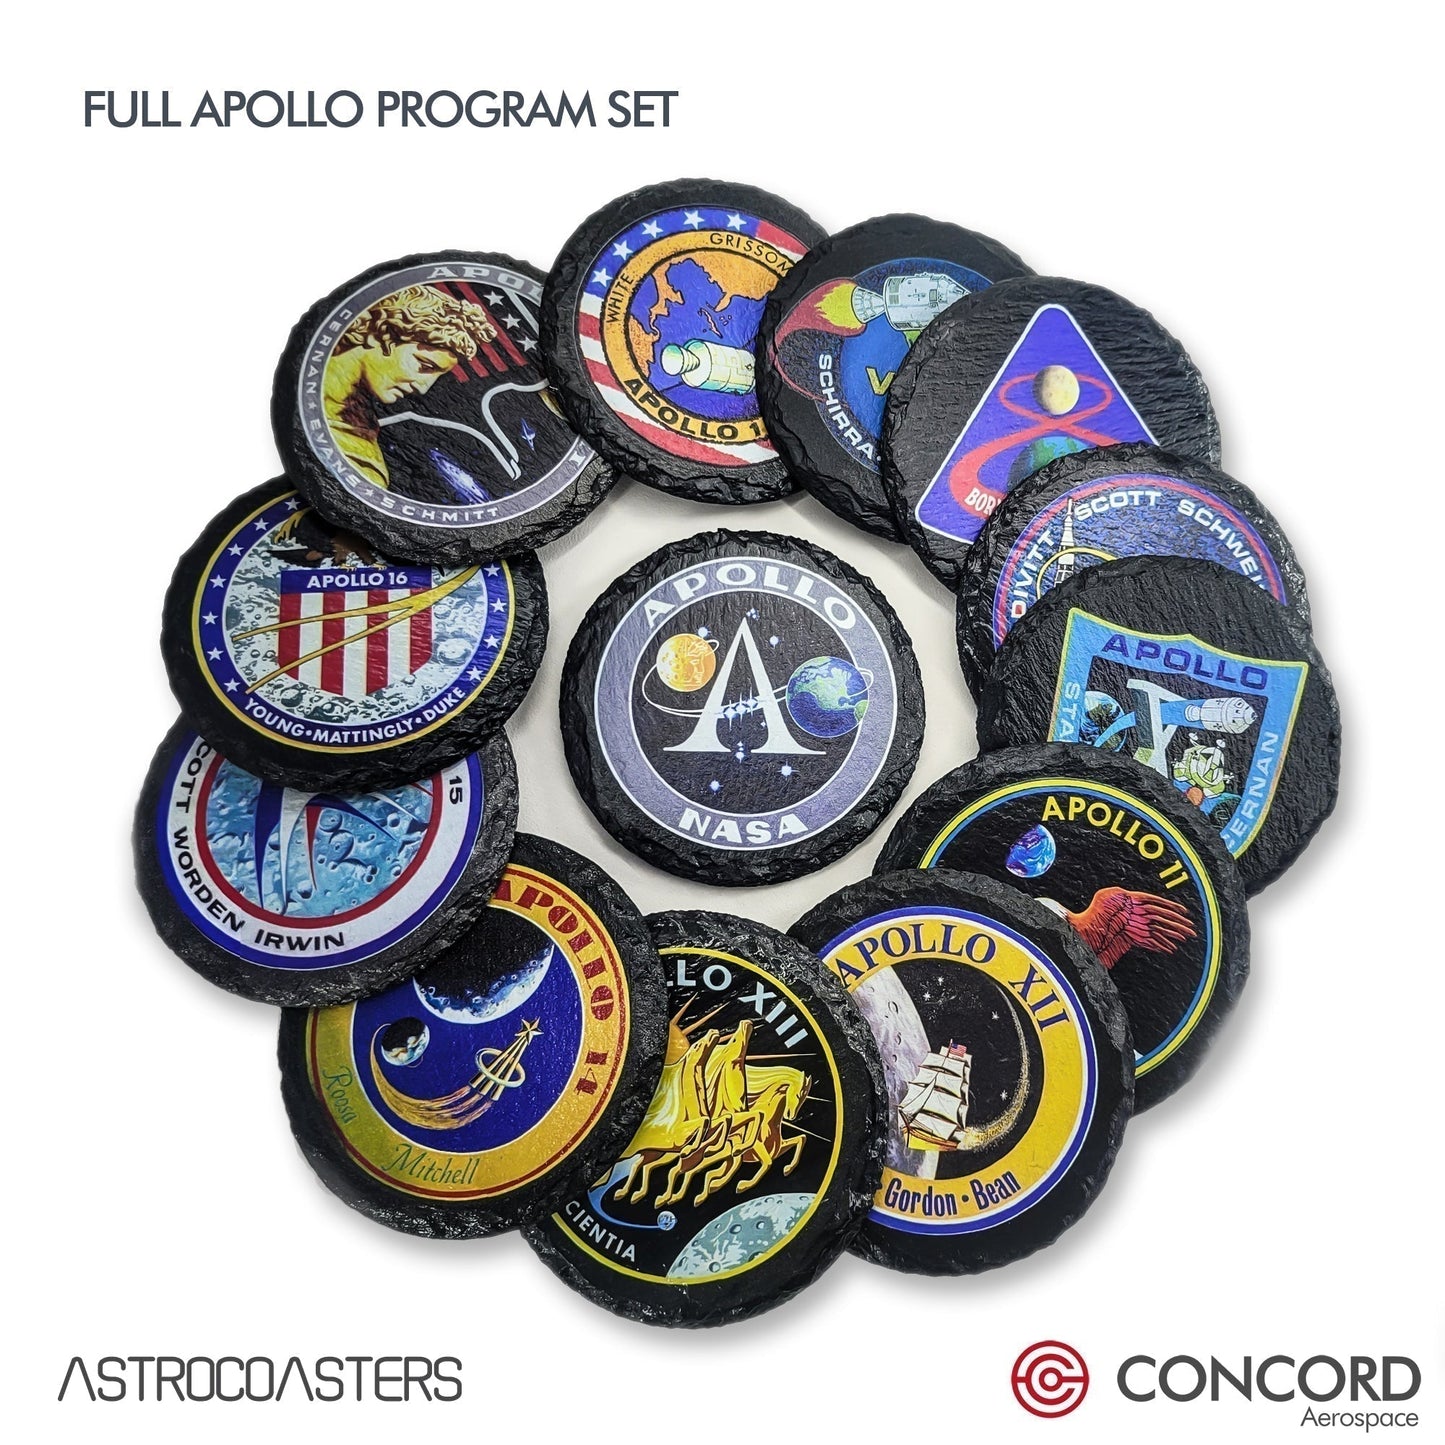 SPACE BAGEL - SLATE COASTER - Concord Aerospace Concord Aerospace Concord Aerospace Coasters